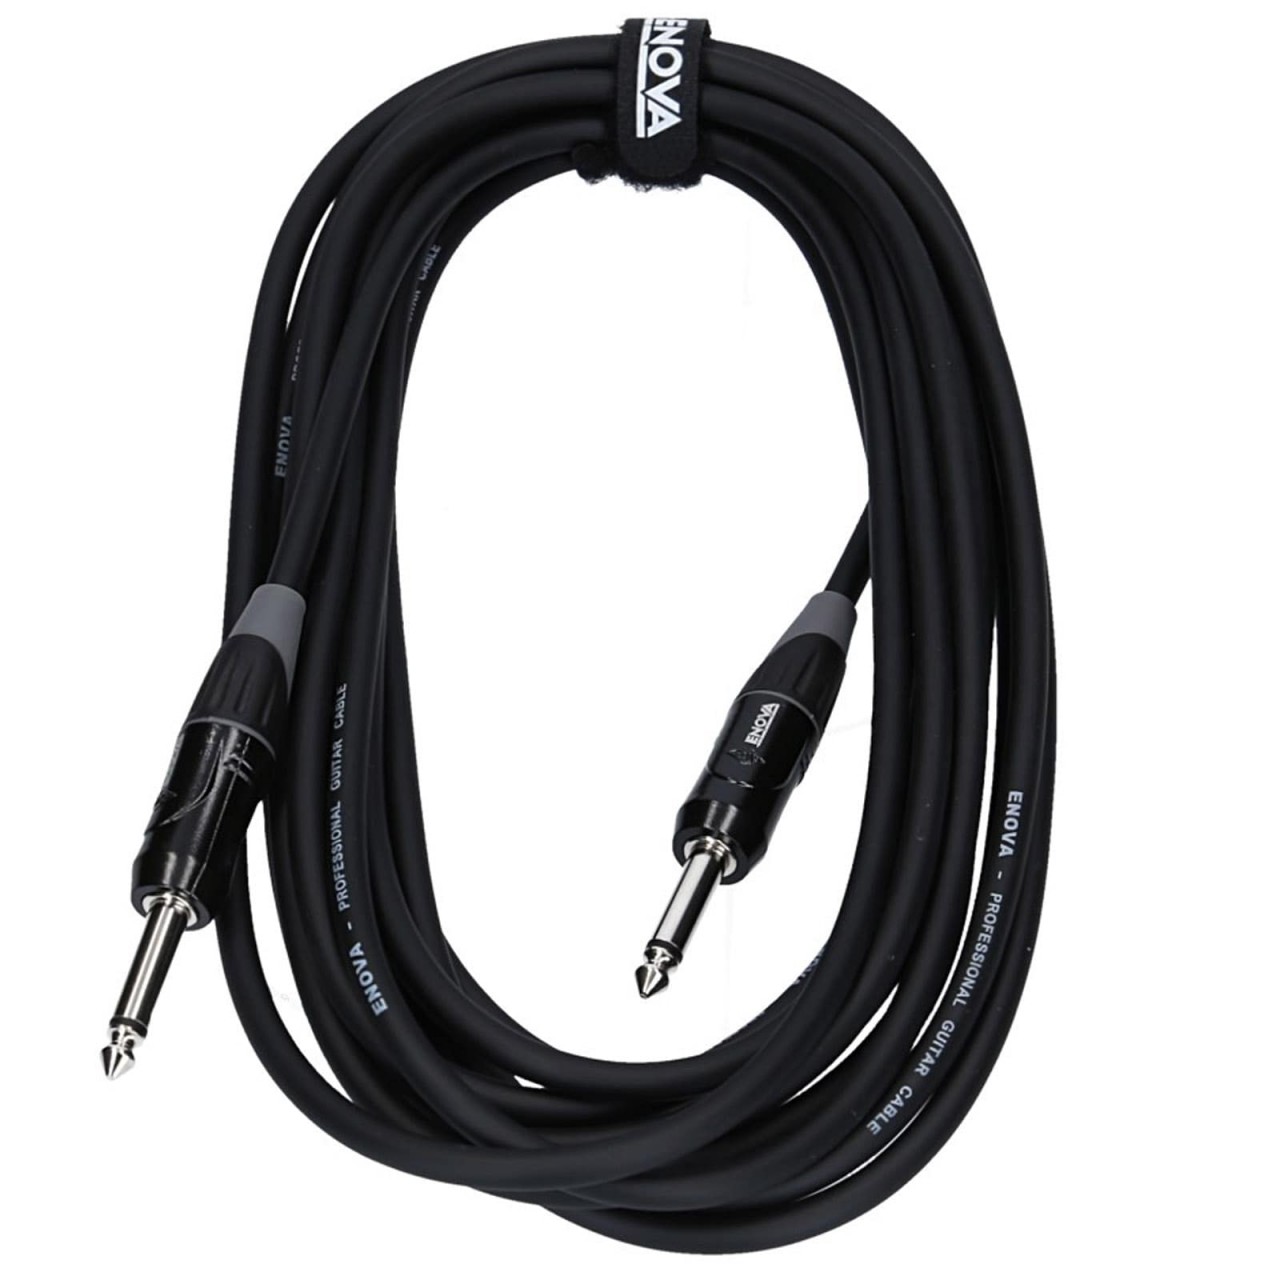 0.2m jack cable mono - Enova EC-A1-PLMM2-0.2 - Audio cable technology by Enova Solutions AG